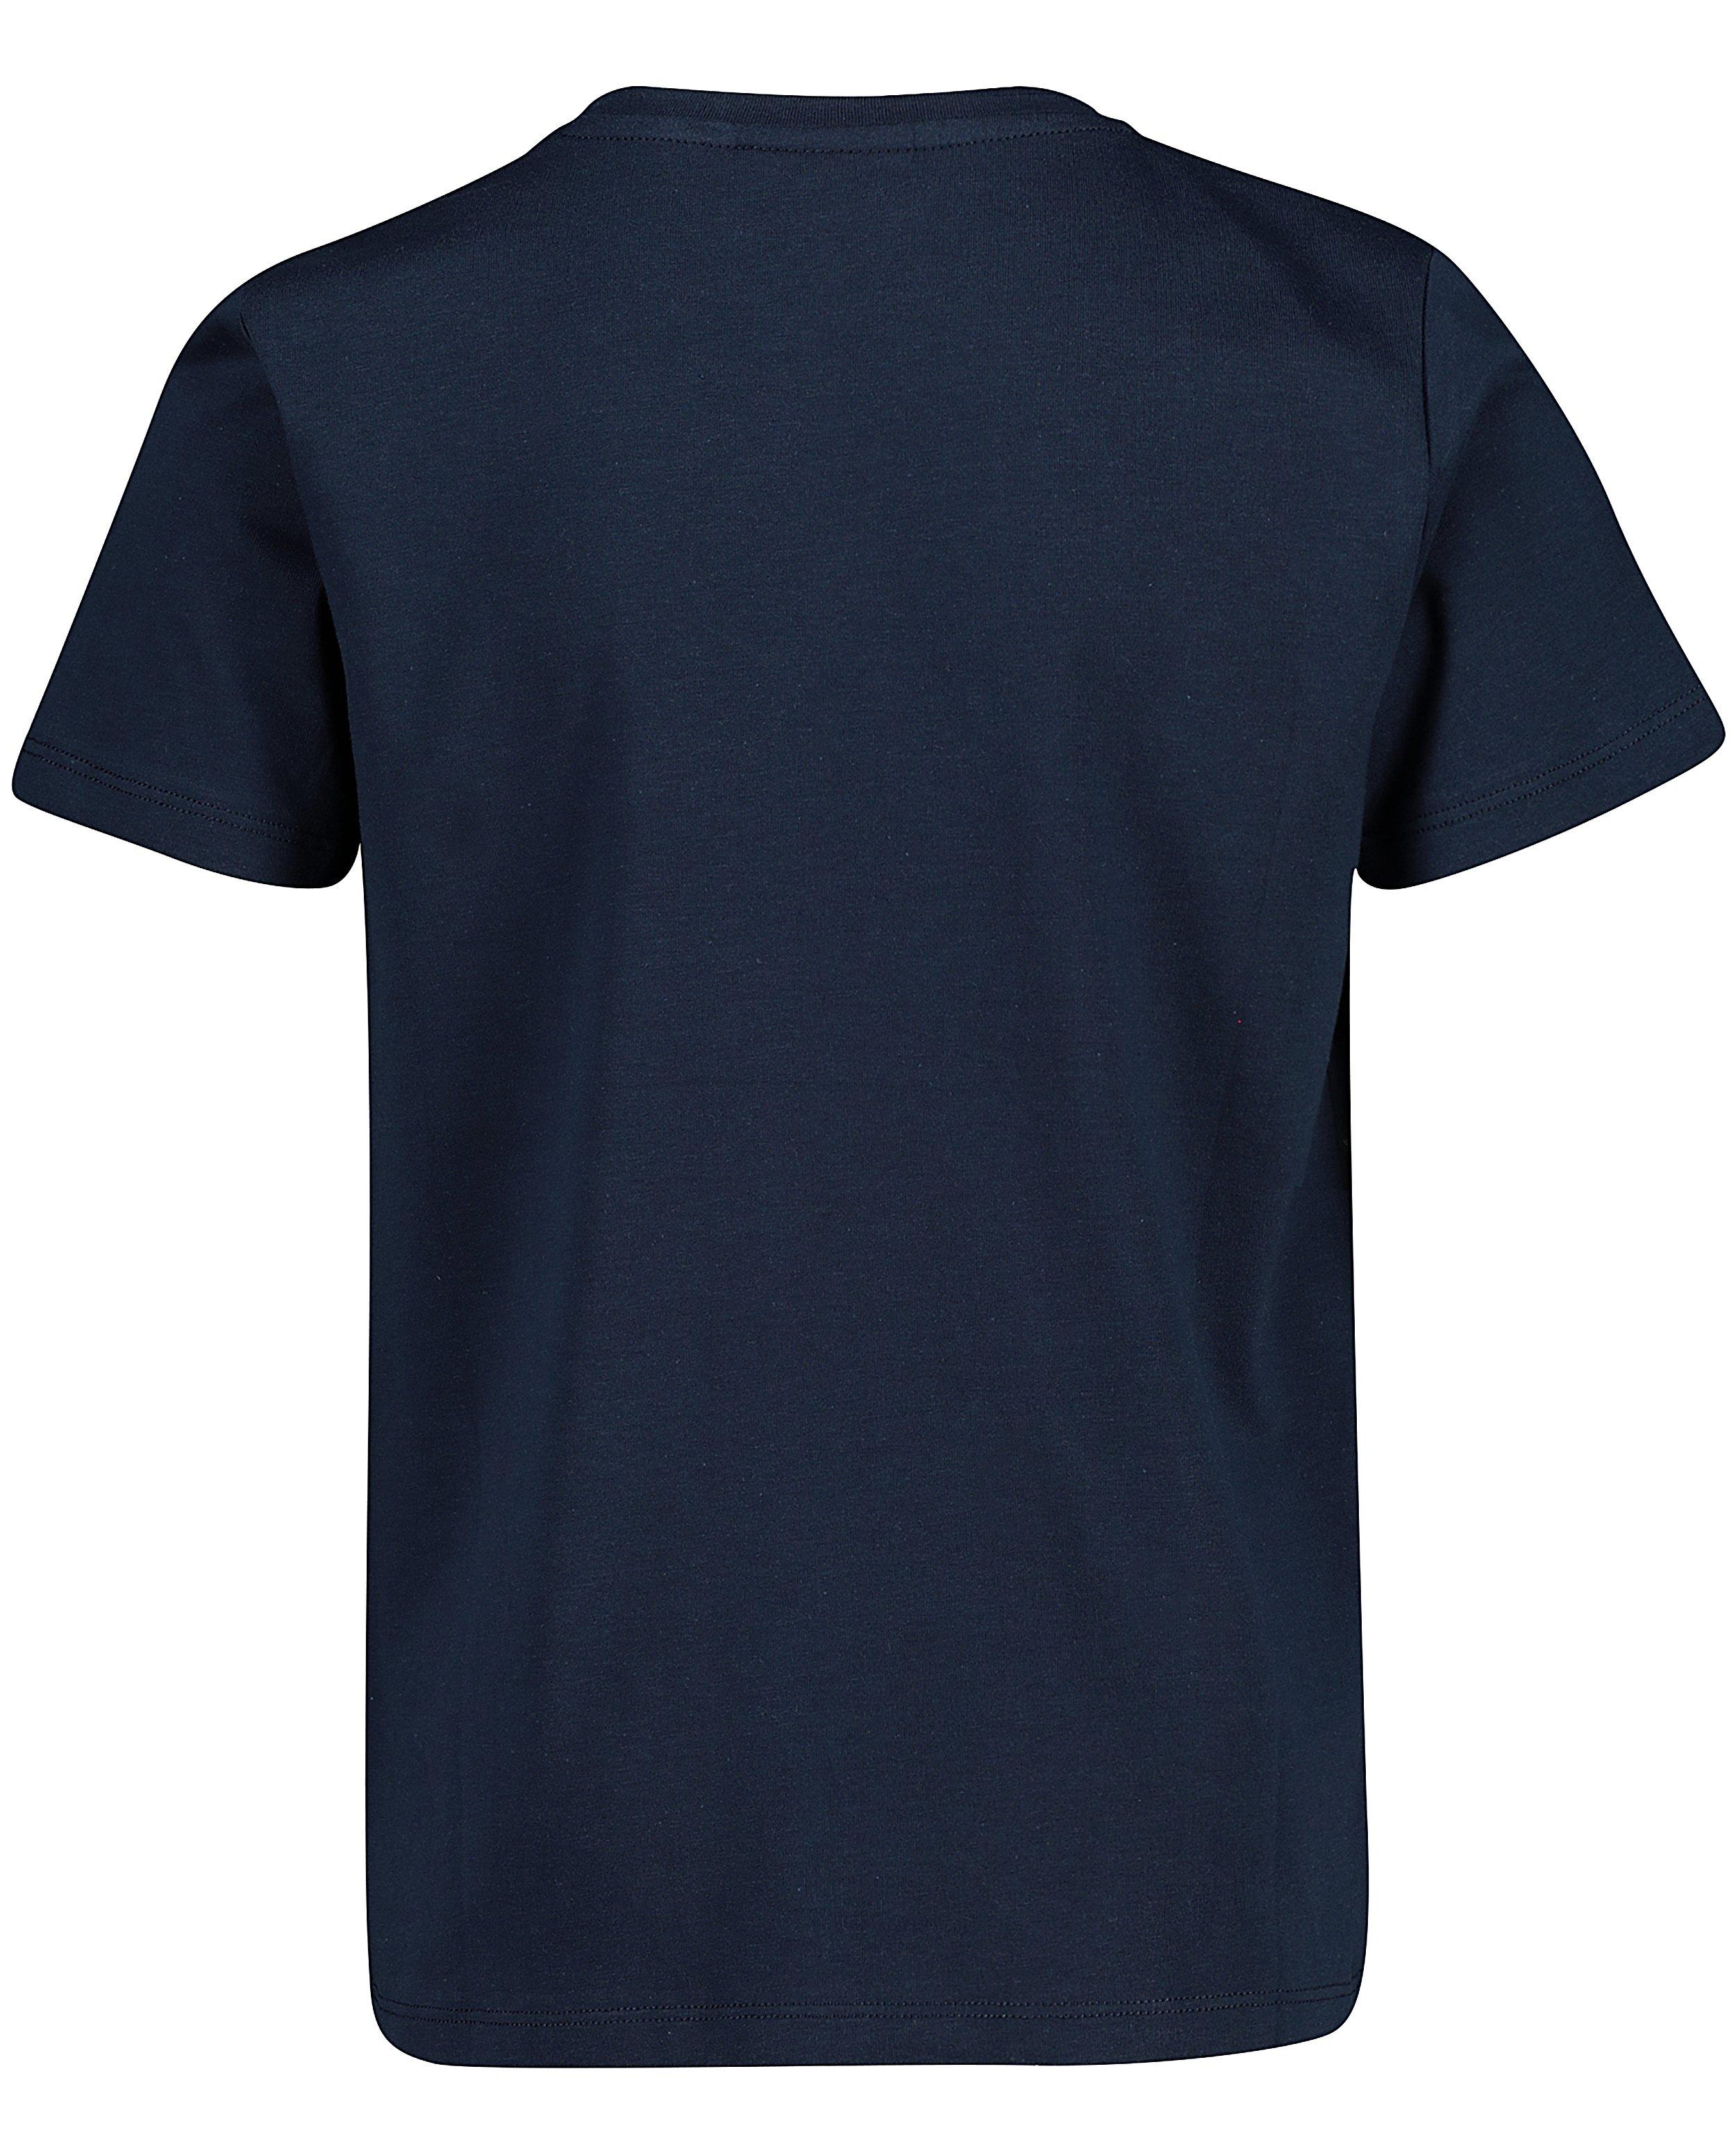 T-shirts - Donkerblauw T-shirt #LikeMe